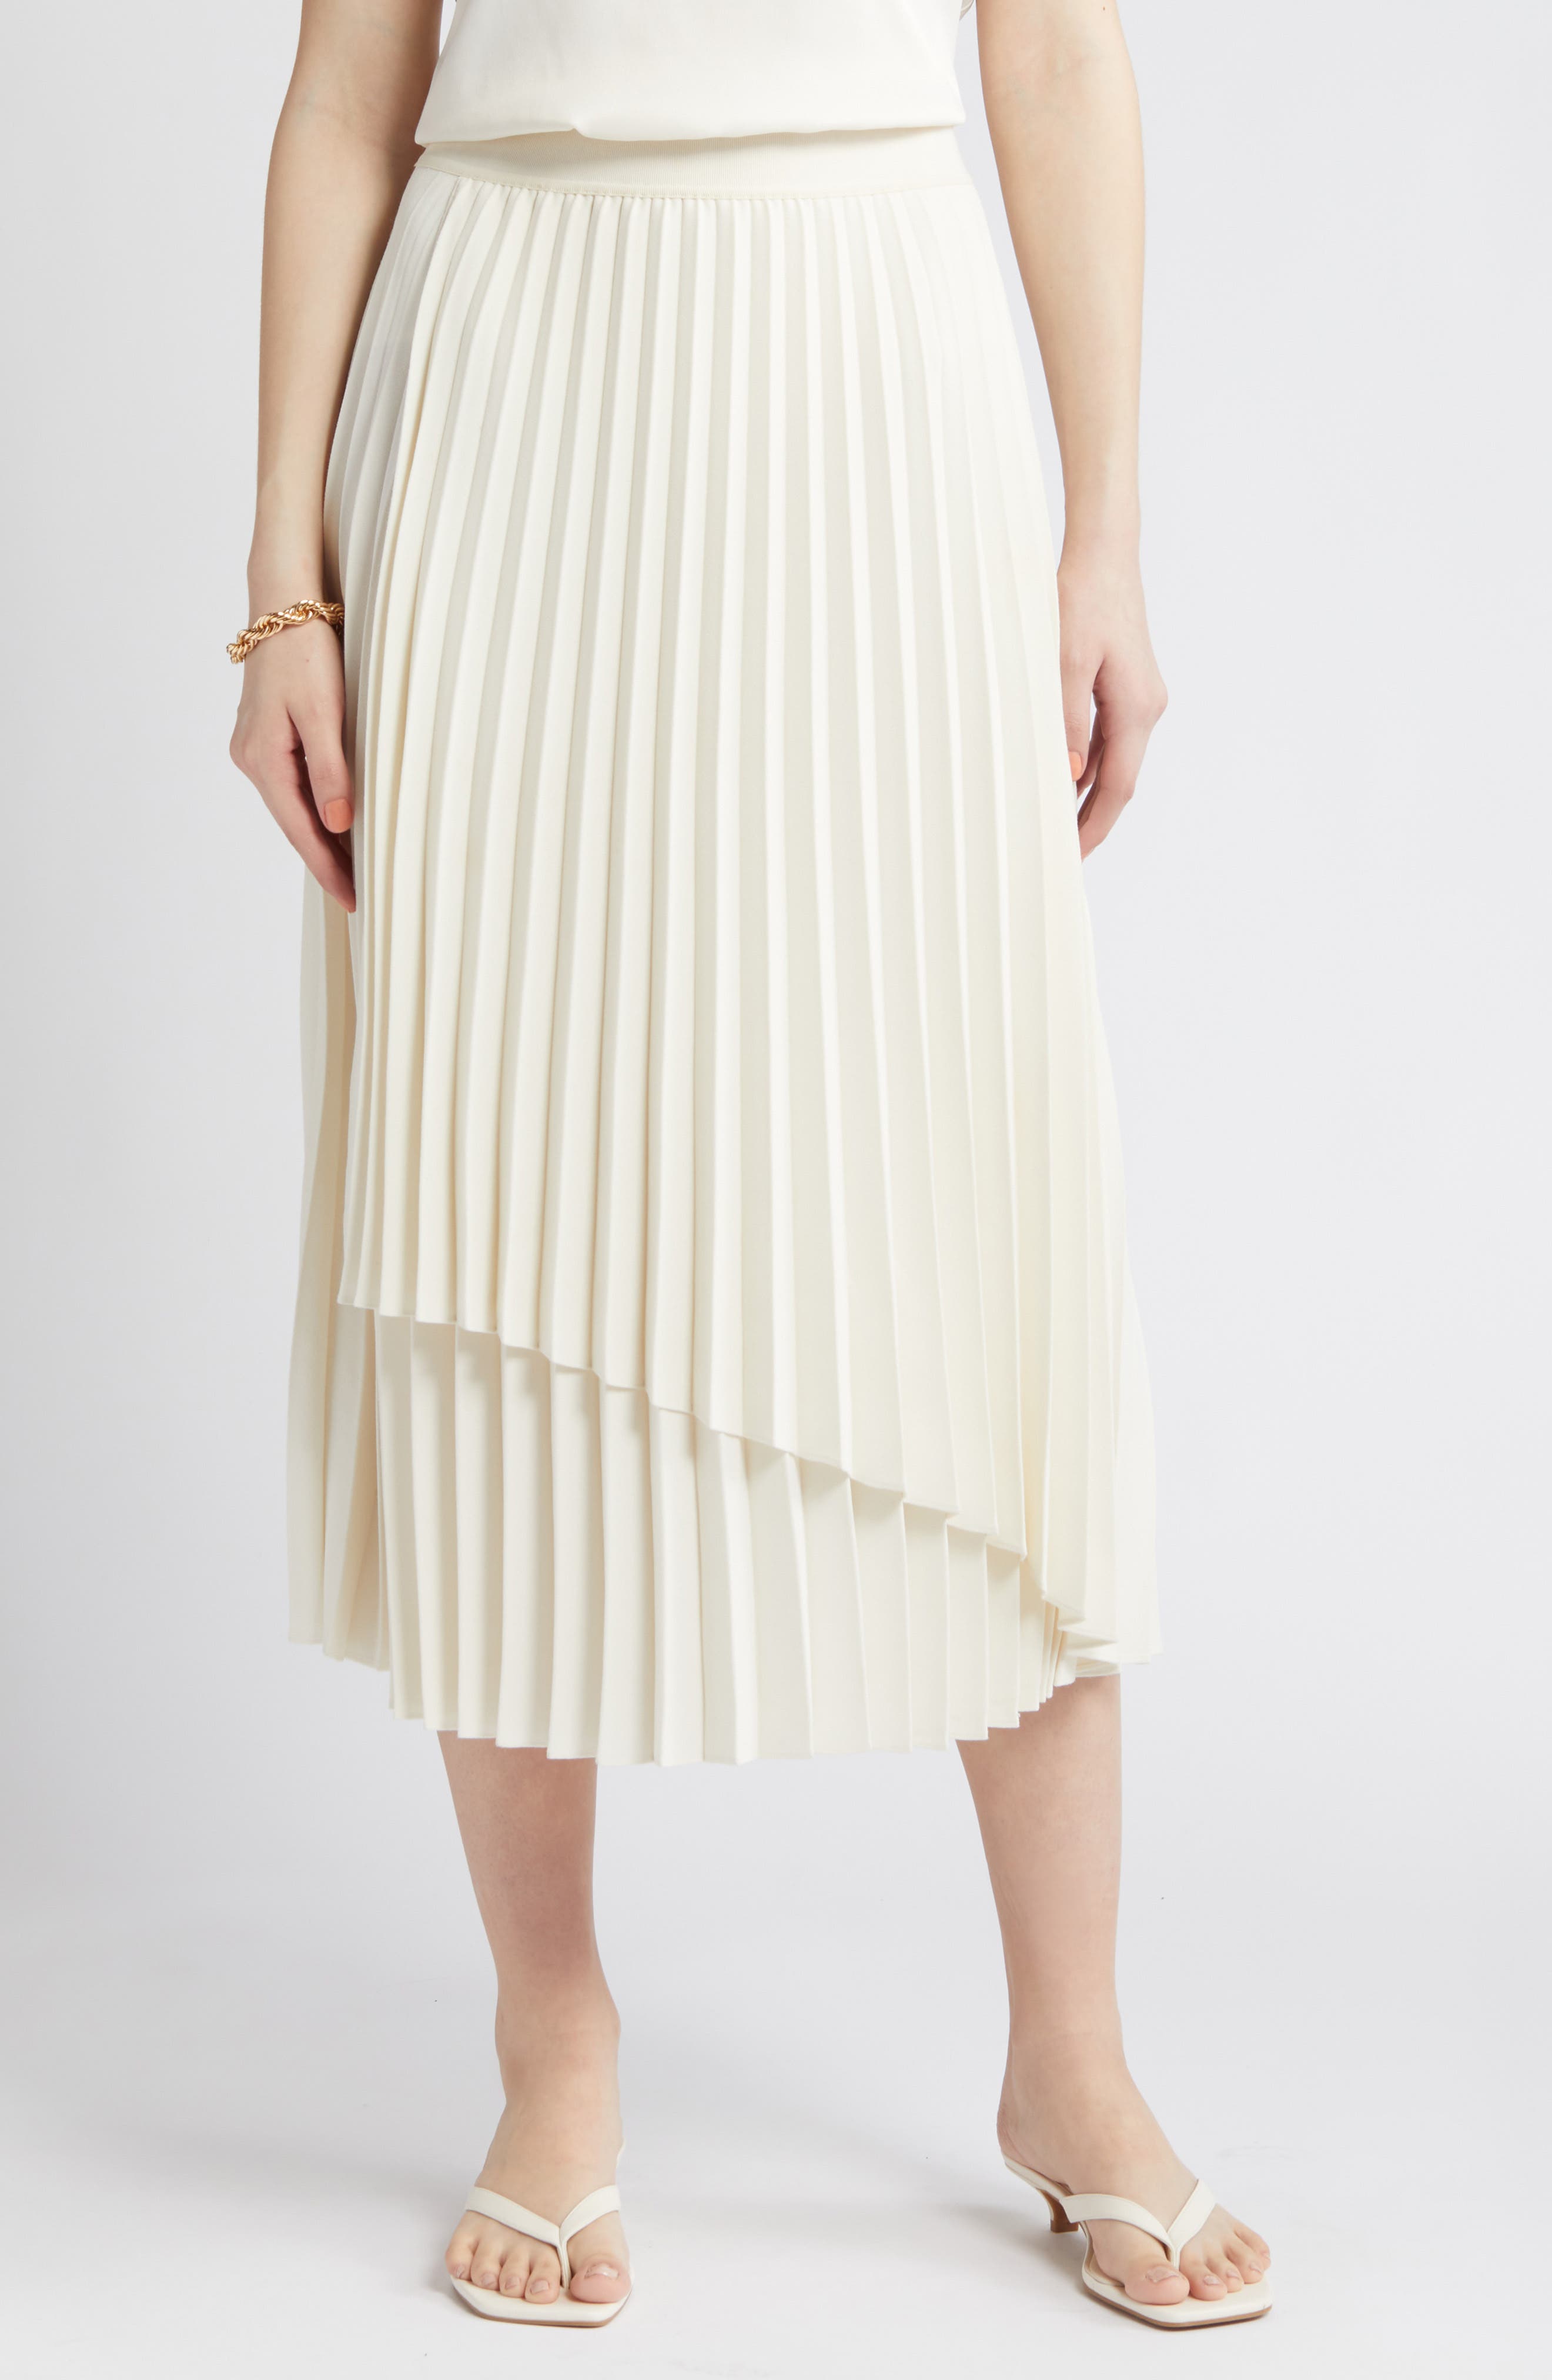 OFF-WHITE Asymmetric Nylon Skirt Black/White